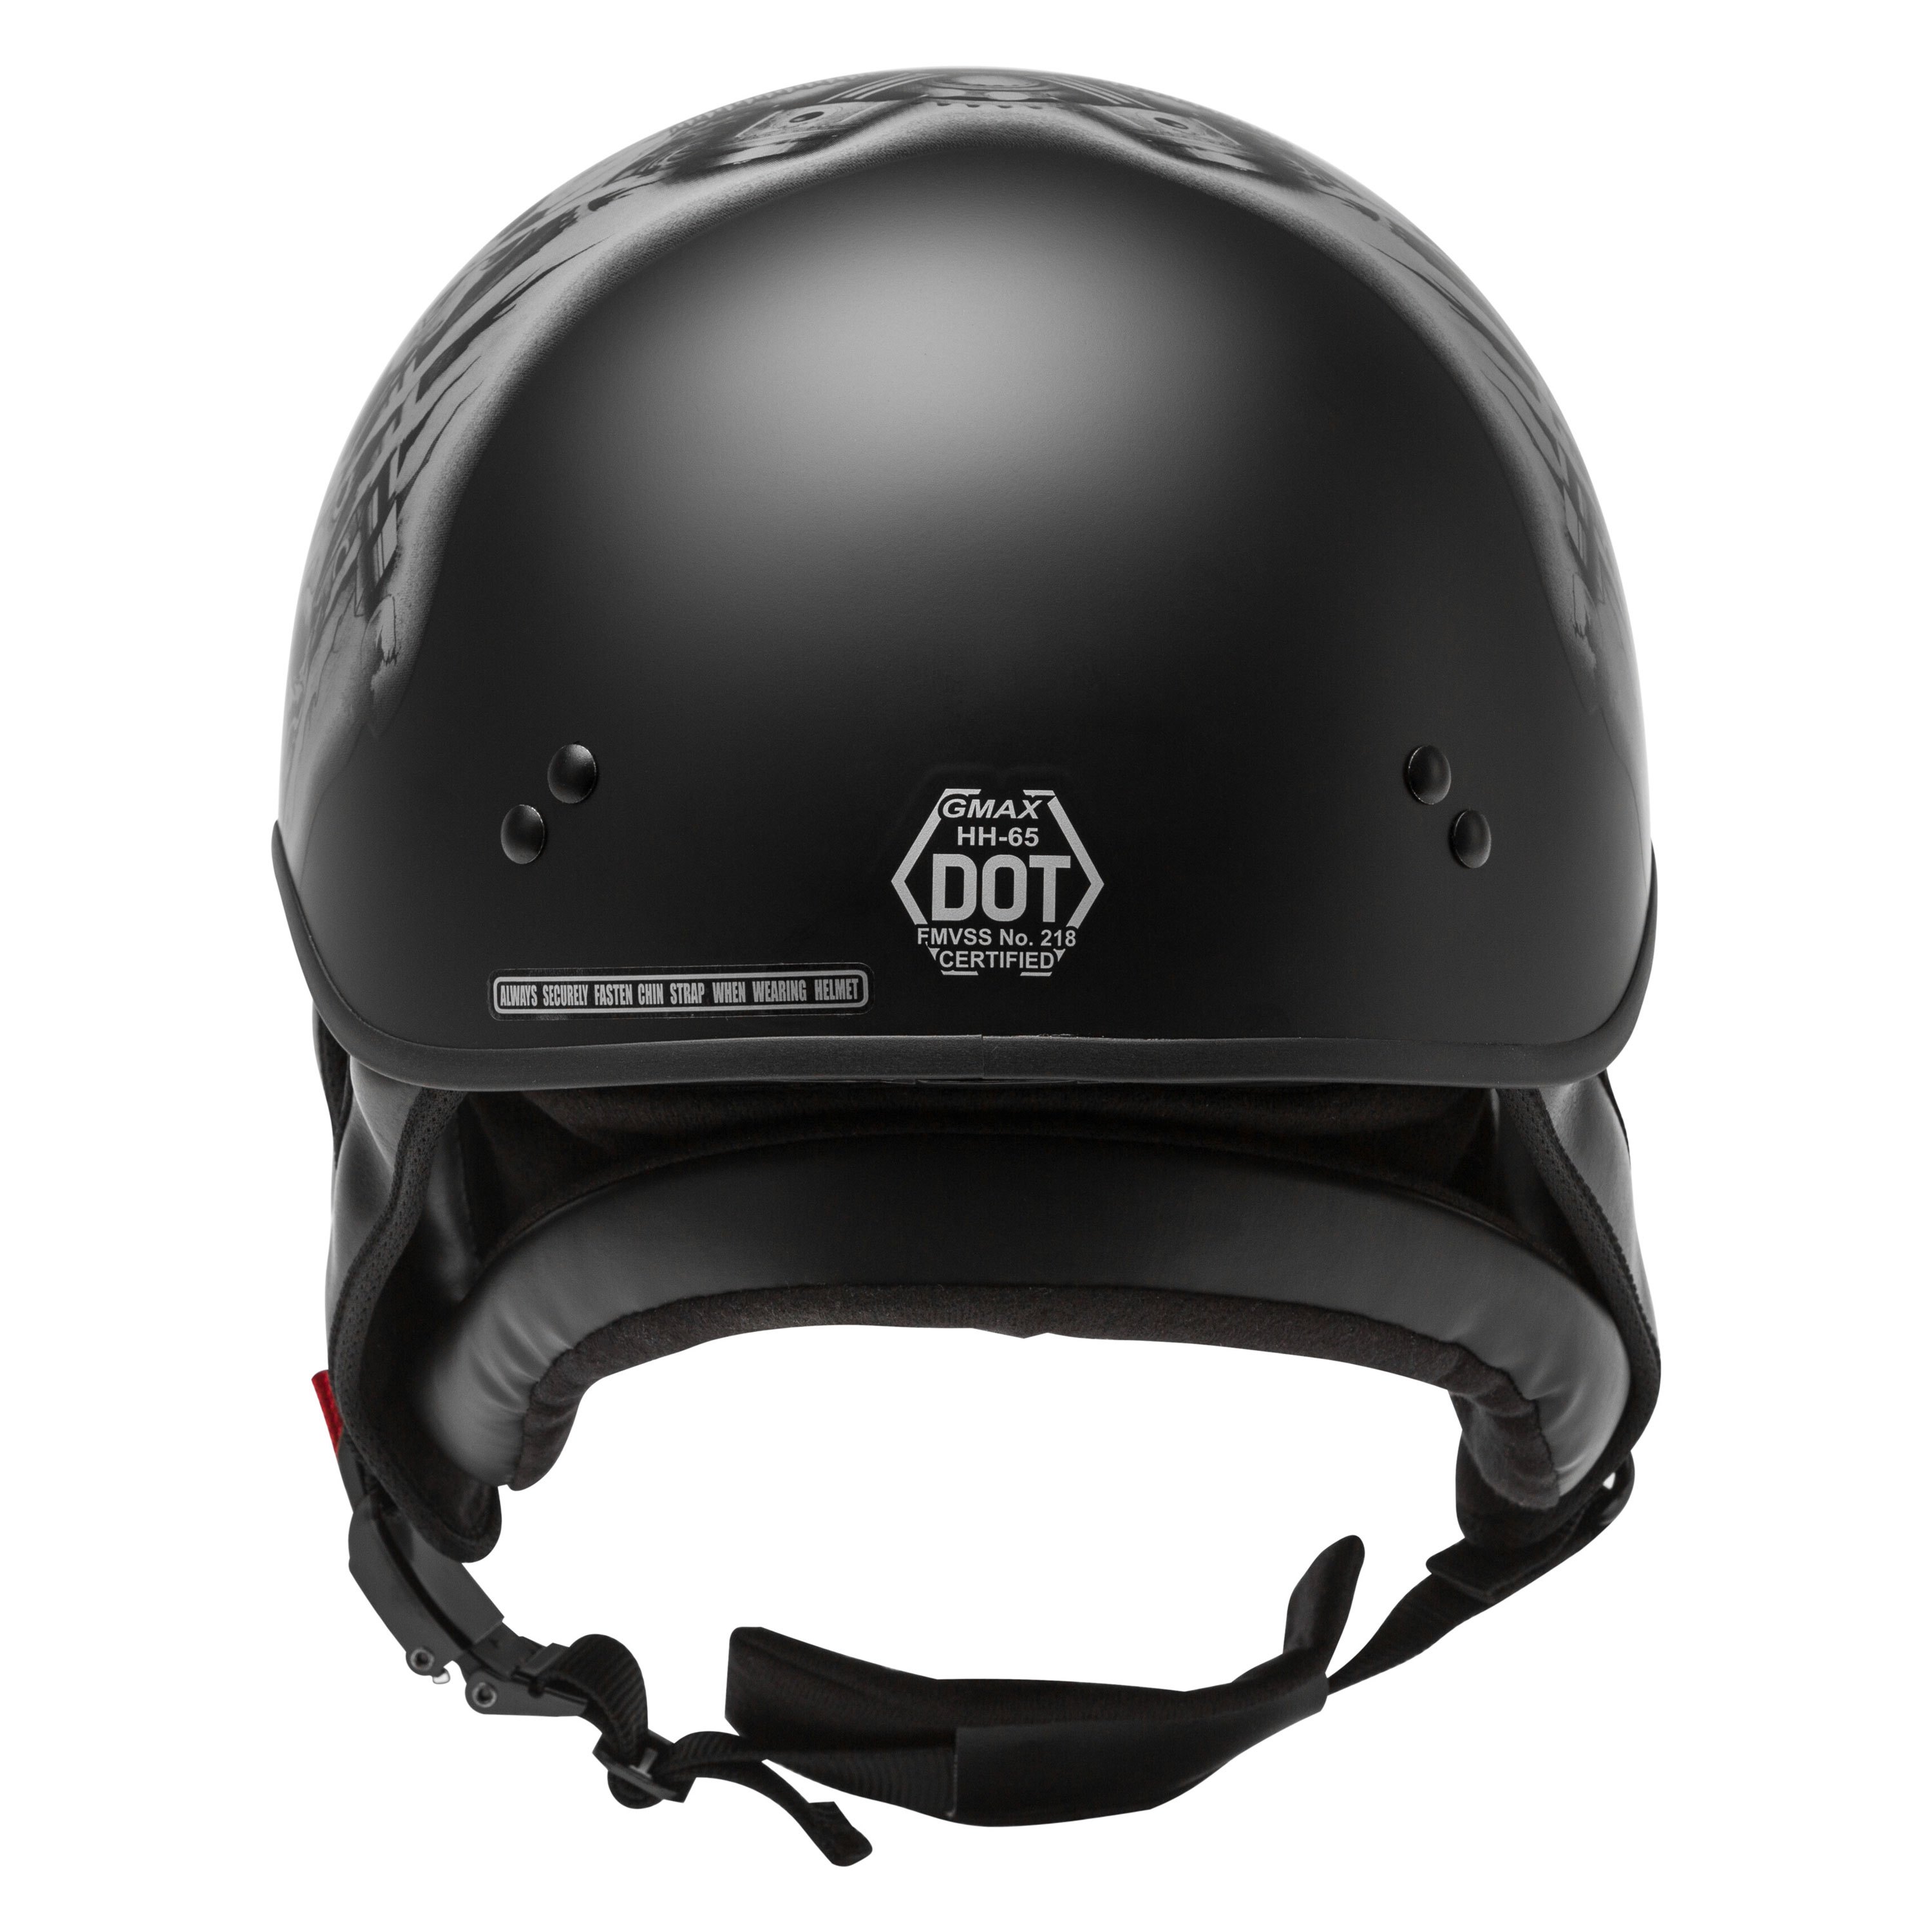 GMAX GM-65 Naked Torque Half Helmet - Black/Silver 72-5665 